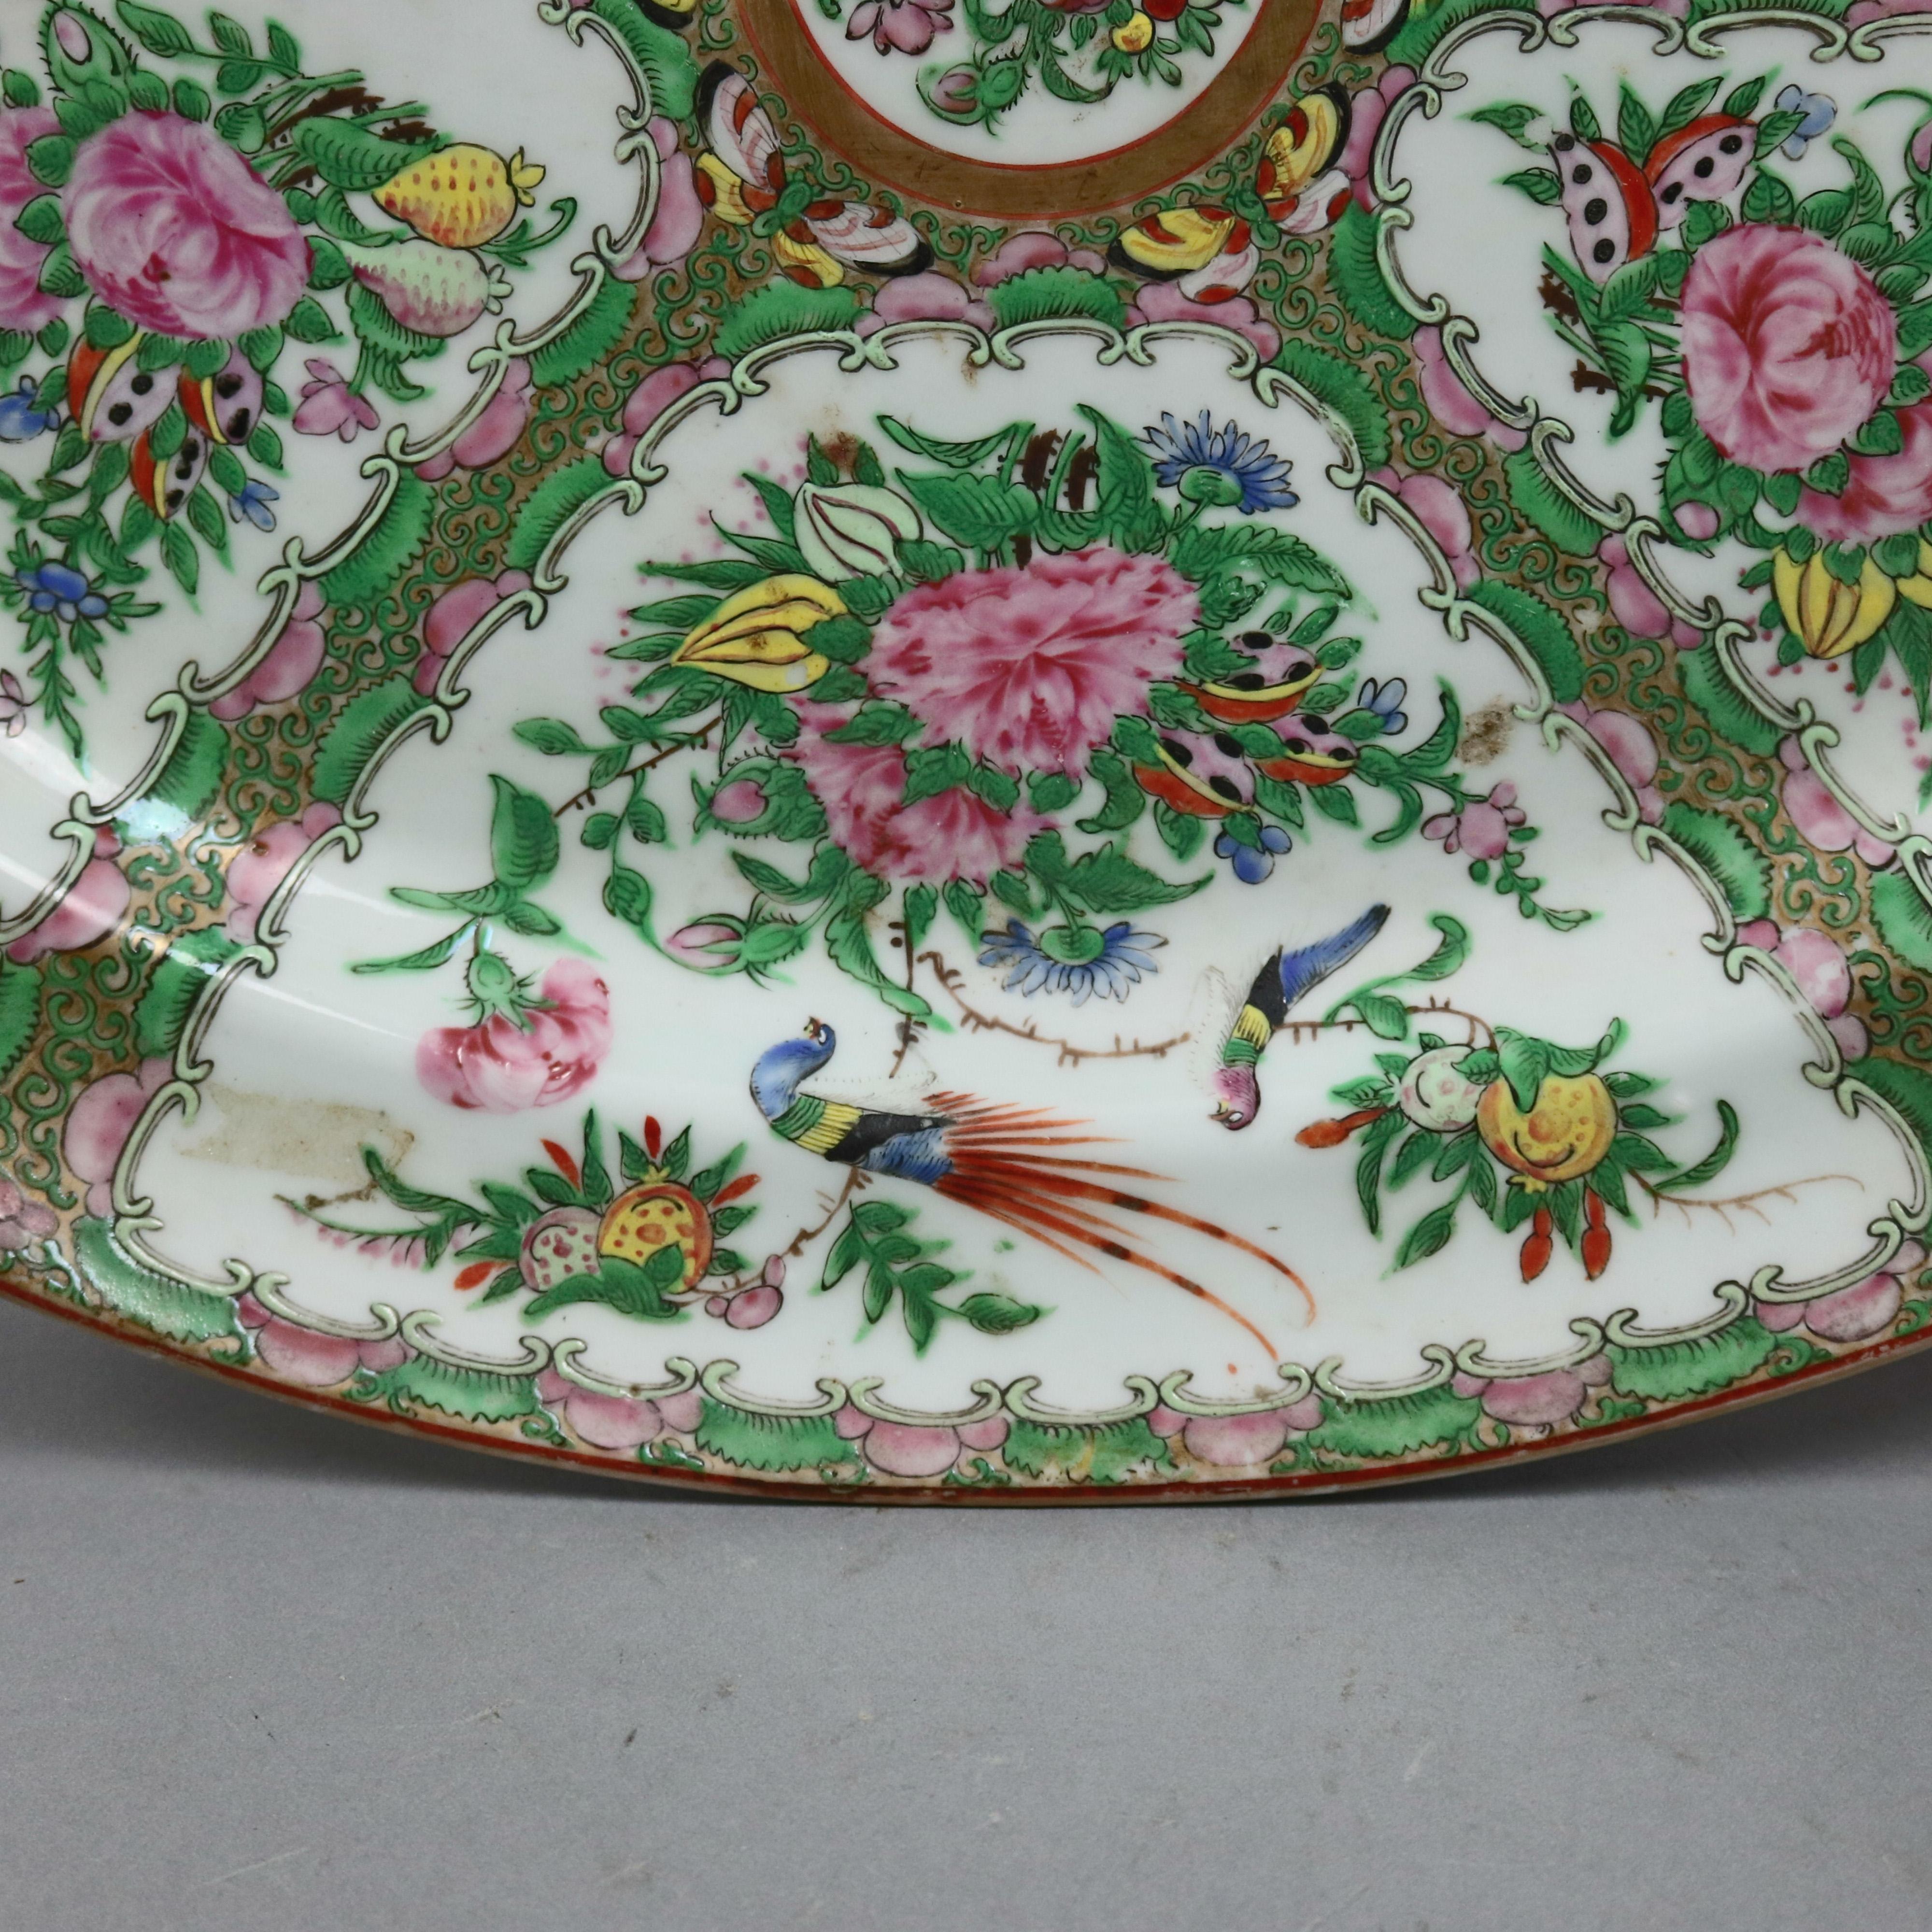 Enameled Chinese Rose Medallion Enamel and Gilt Decorated Porcelain Platter, circa 1890